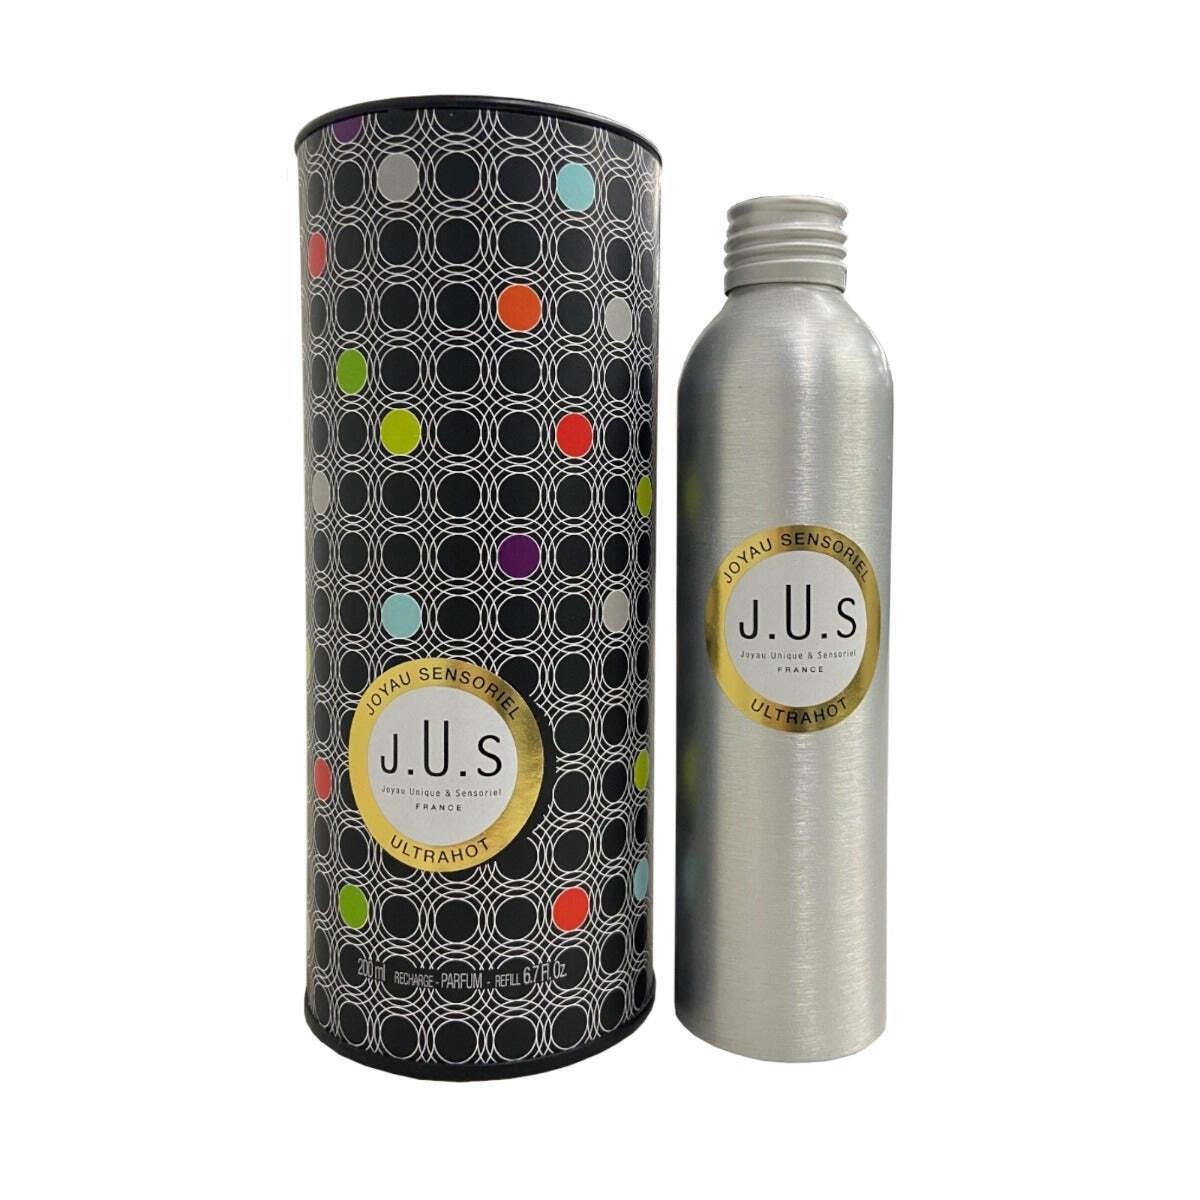 Joyau Sensoriel by J.u.s Perfume For Unisex Edp 6.7 oz